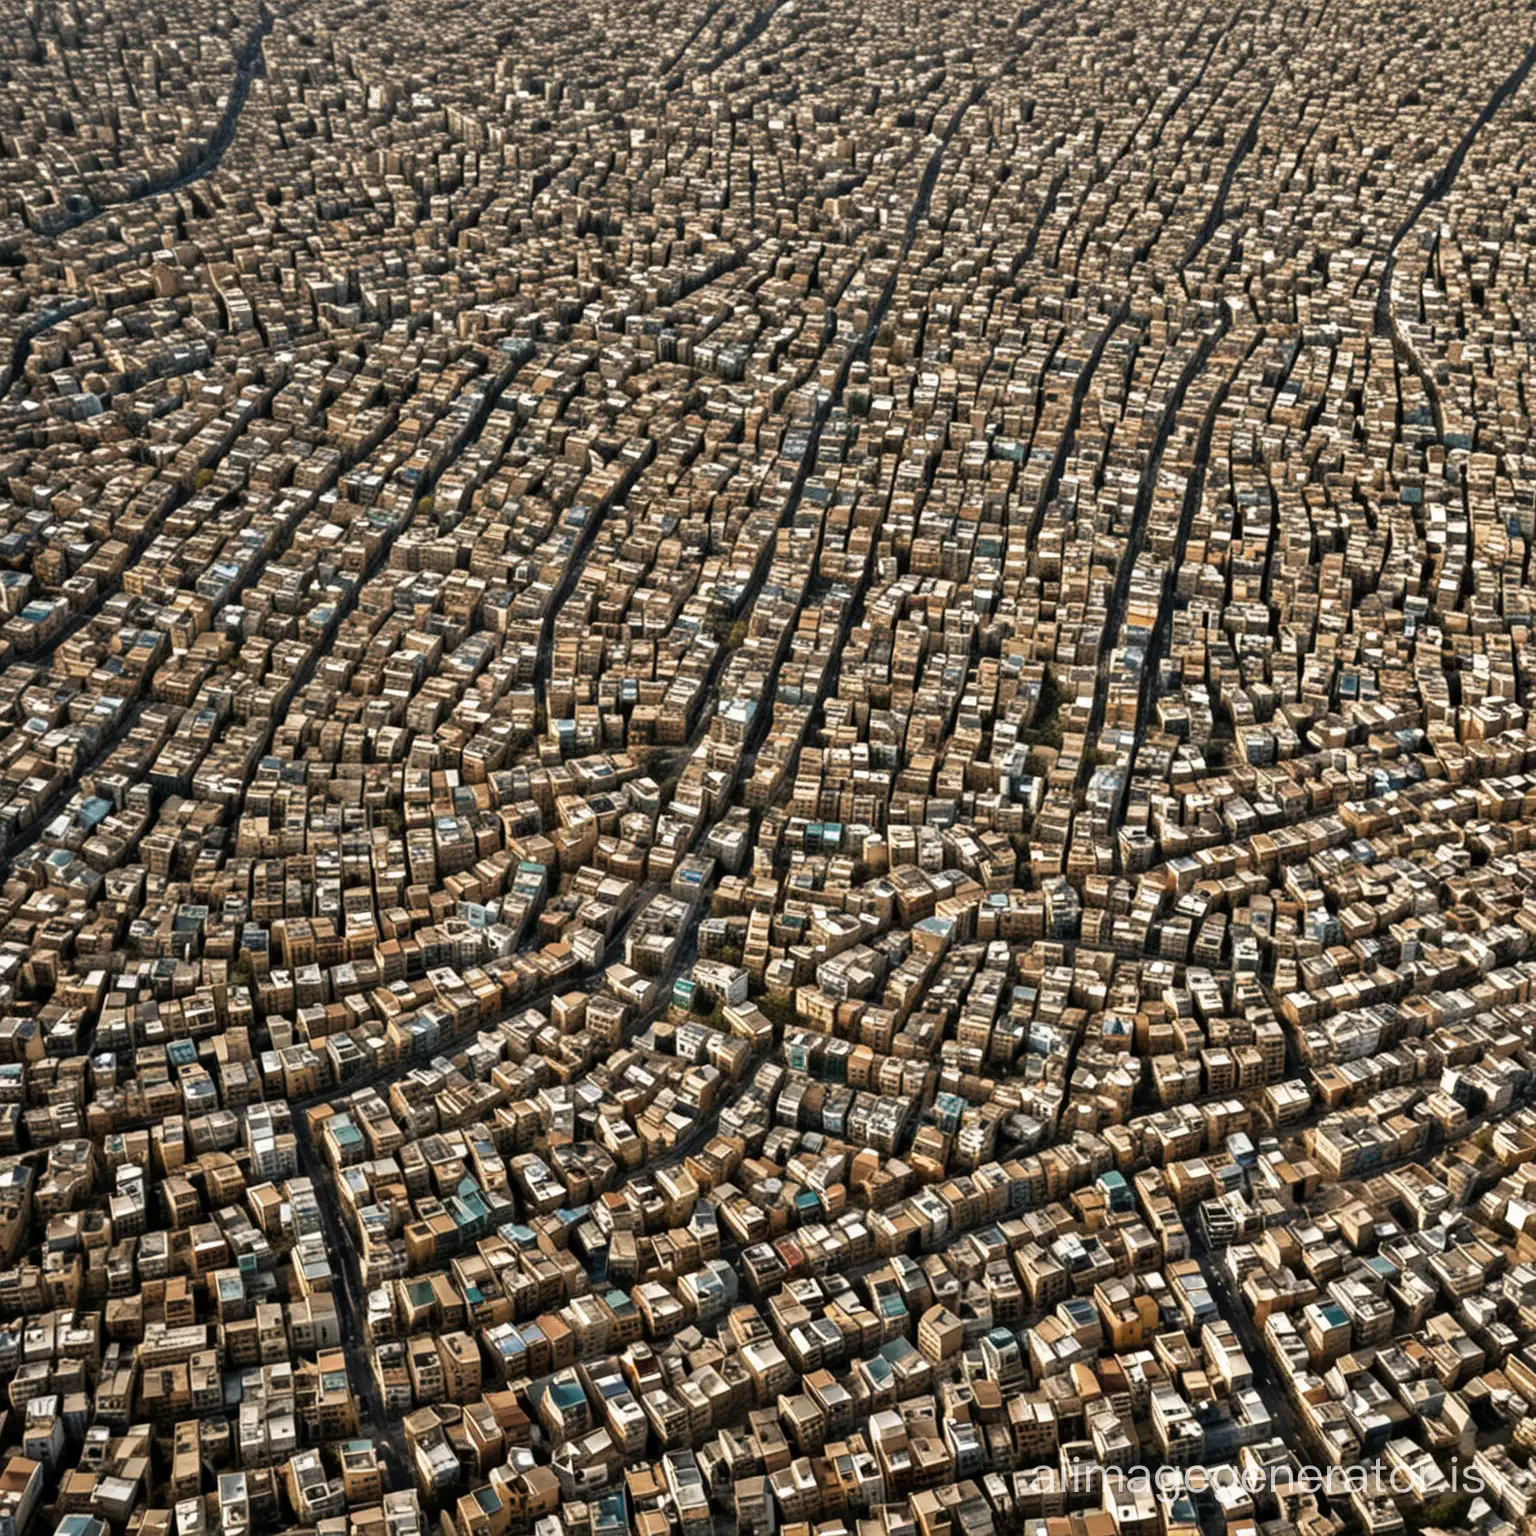 PostApocalyptic-Tehran-Desolate-Cityscape-Void-of-Human-Presence